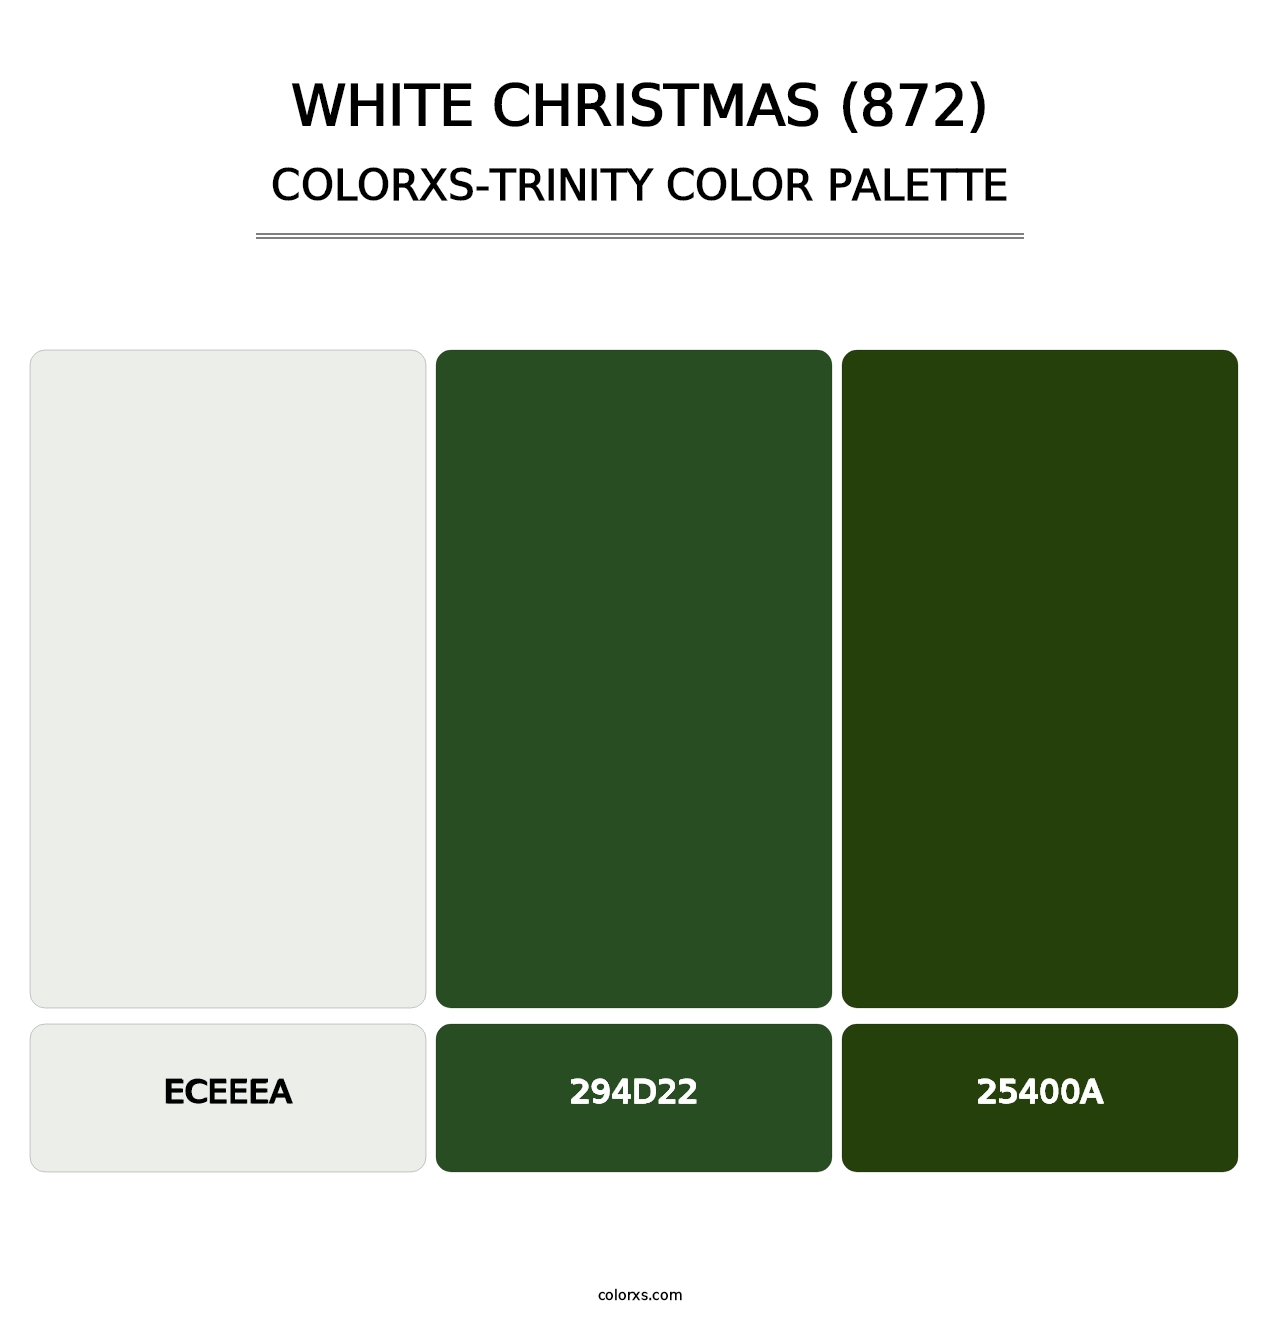 White Christmas (872) - Colorxs Trinity Palette